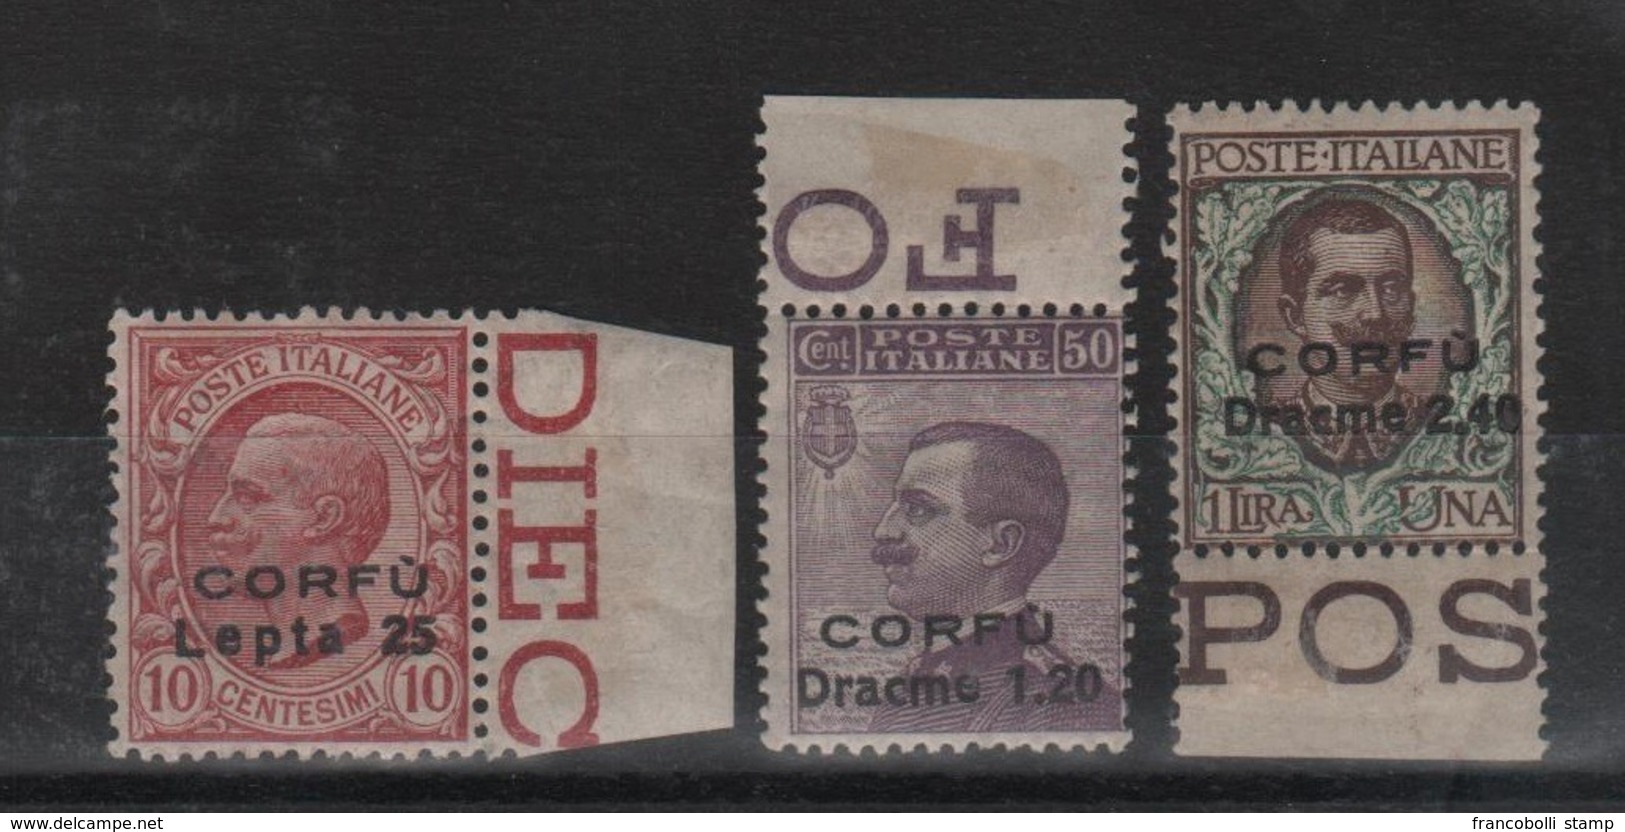 1923 Occupazione Corfù Francobolli D'Italia Sopr. CORFU Serie Cpl MNH B.F. - Corfù